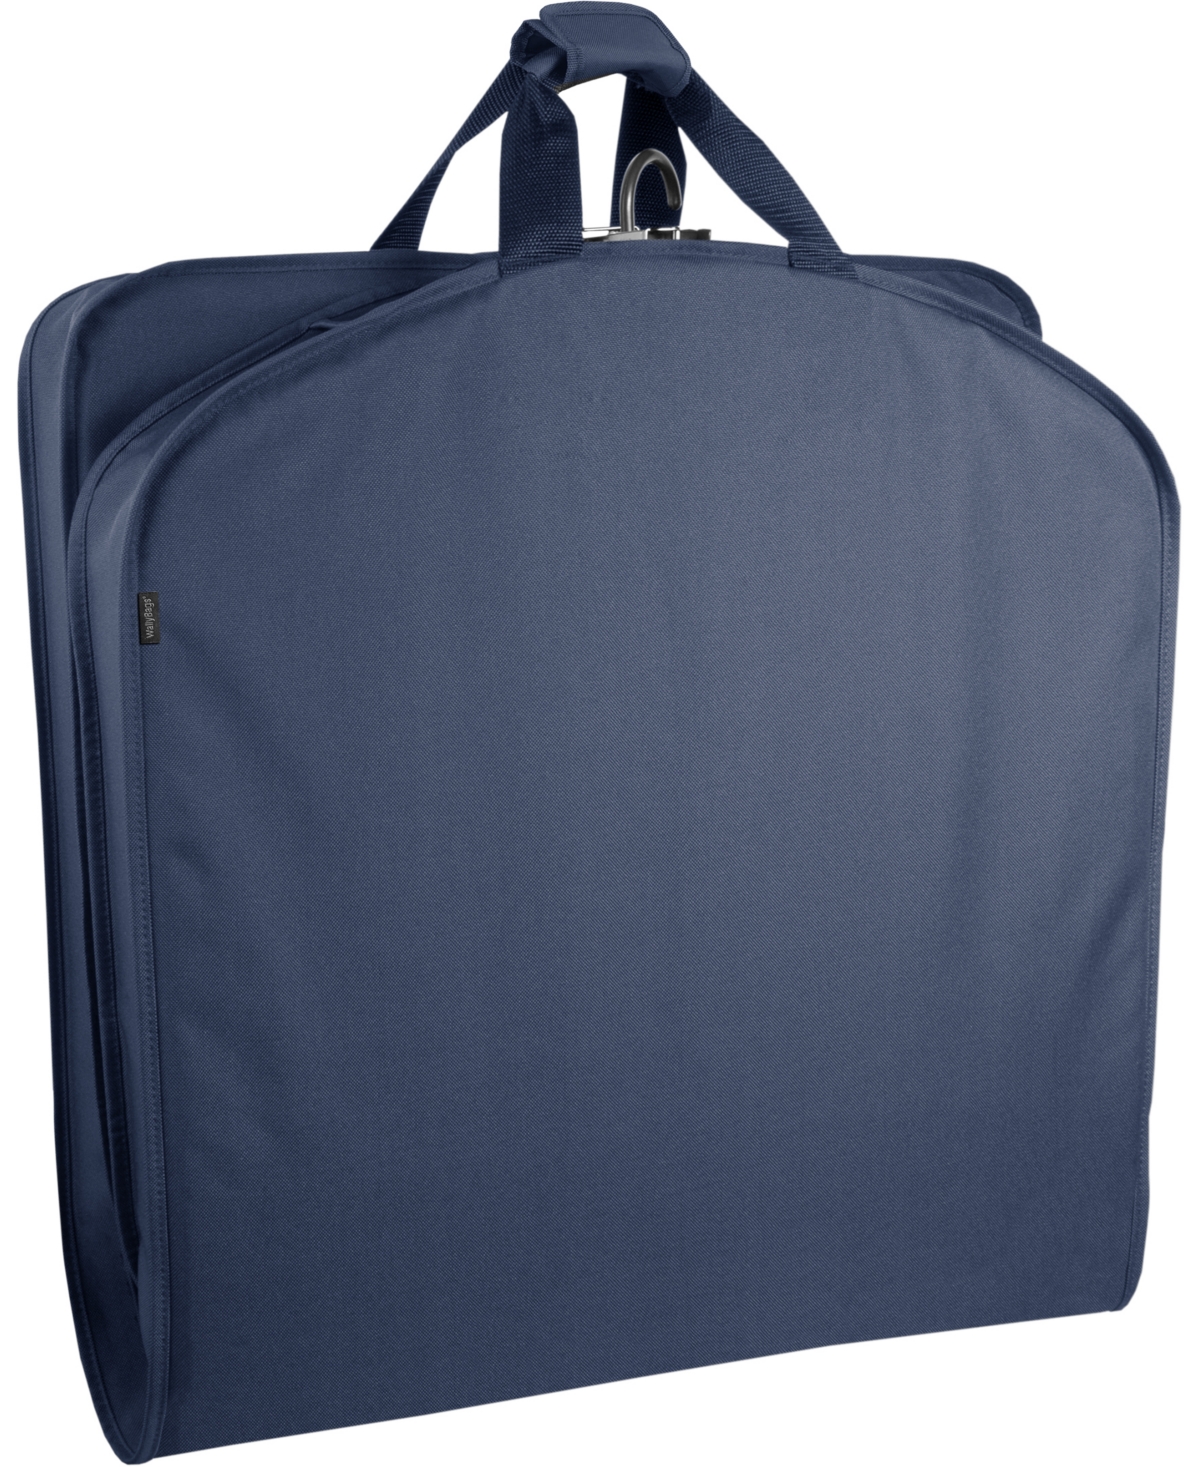 Wallybags 40" Deluxe Travel Garment Bag In Navy